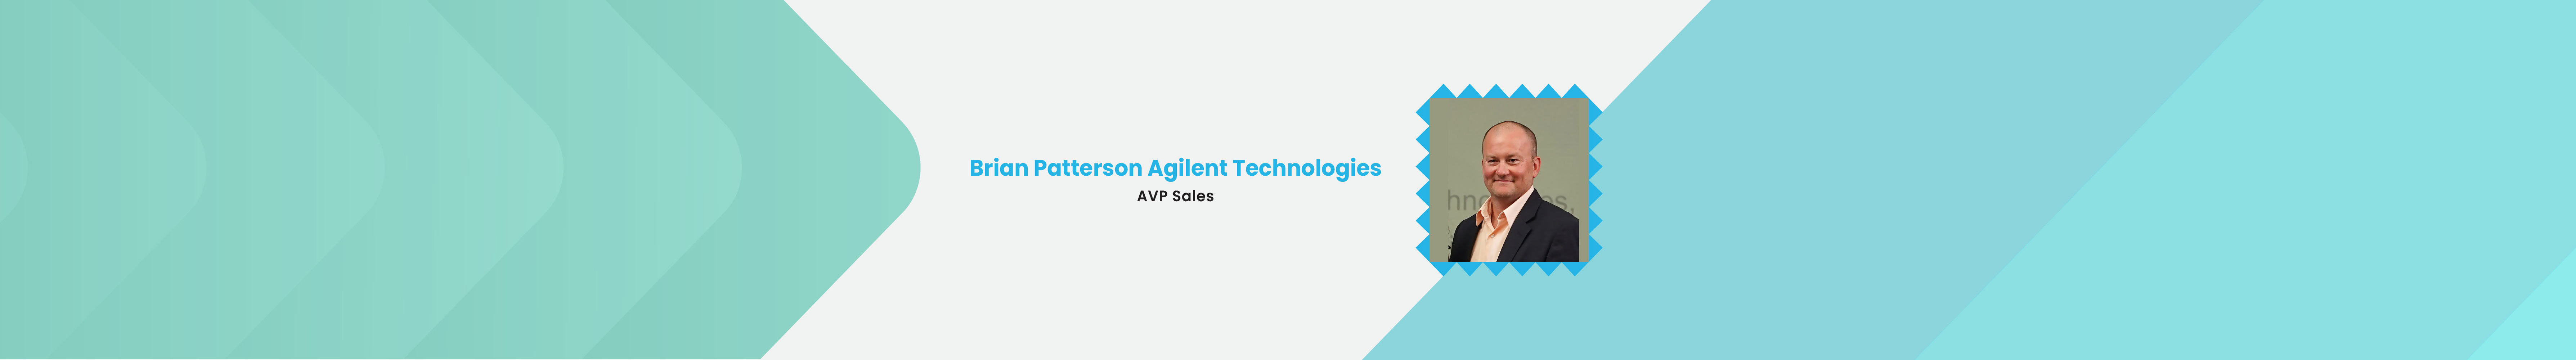 Brian Patterson Agilent Technologiess profilbanner